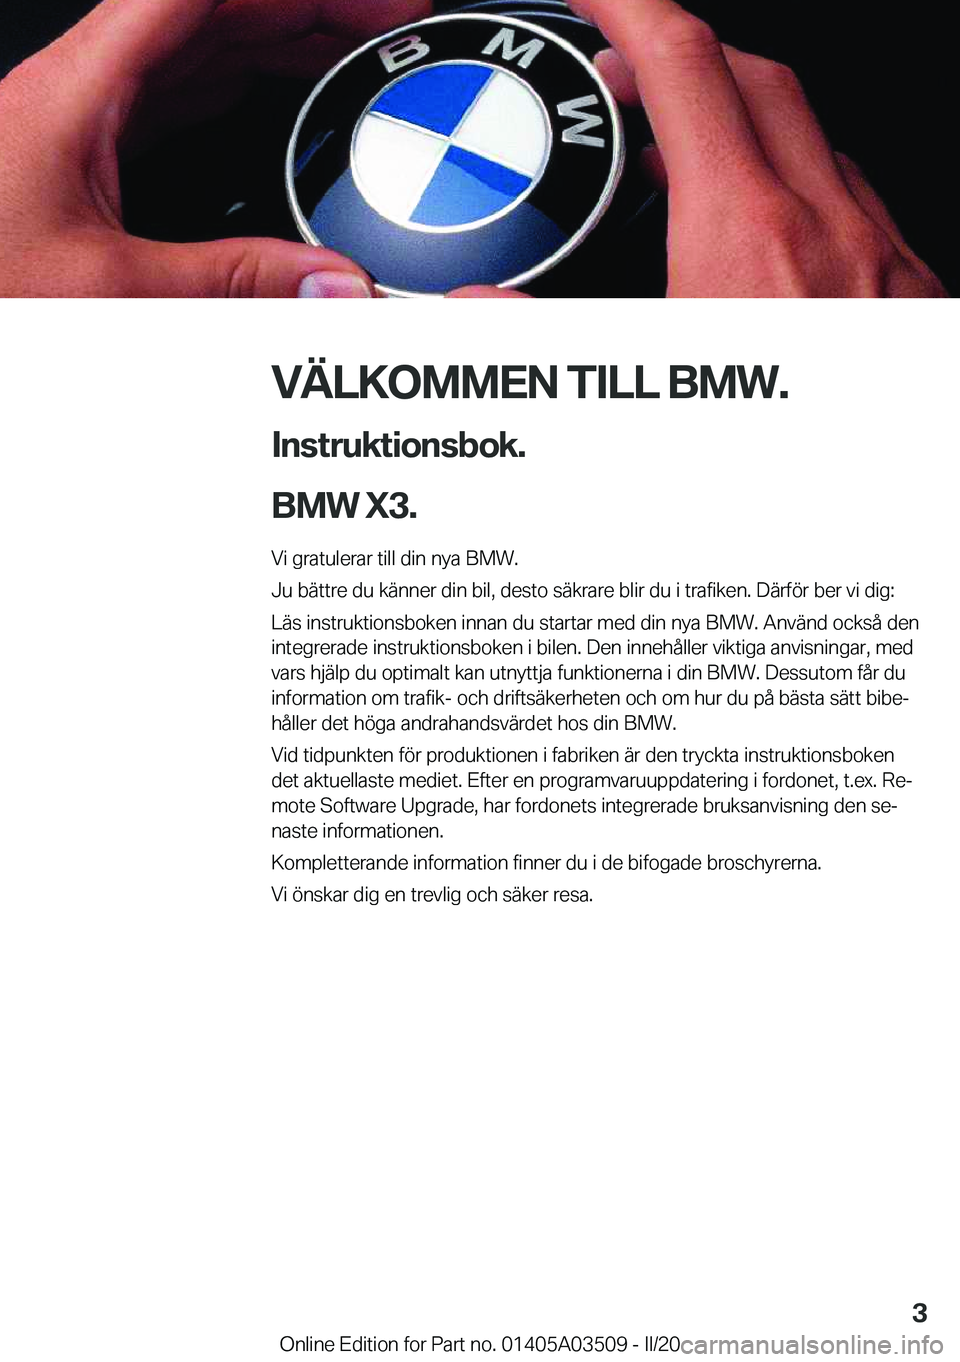 BMW X3 2020  InstruktionsbÖcker (in Swedish) �V�Ä�L�K�O�M�M�E�N��T�I�L�L��B�M�W�.�I�n�s�t�r�u�k�t�i�o�n�s�b�o�k�.
�B�M�W��X�3�.
�V�i��g�r�a�t�u�l�e�r�a�r��t�i�l�l��d�i�n��n�y�a��B�M�W�.
�J�u��b�ä�t�t�r�e��d�u��k�ä�n�n�e�r��d�i�n�